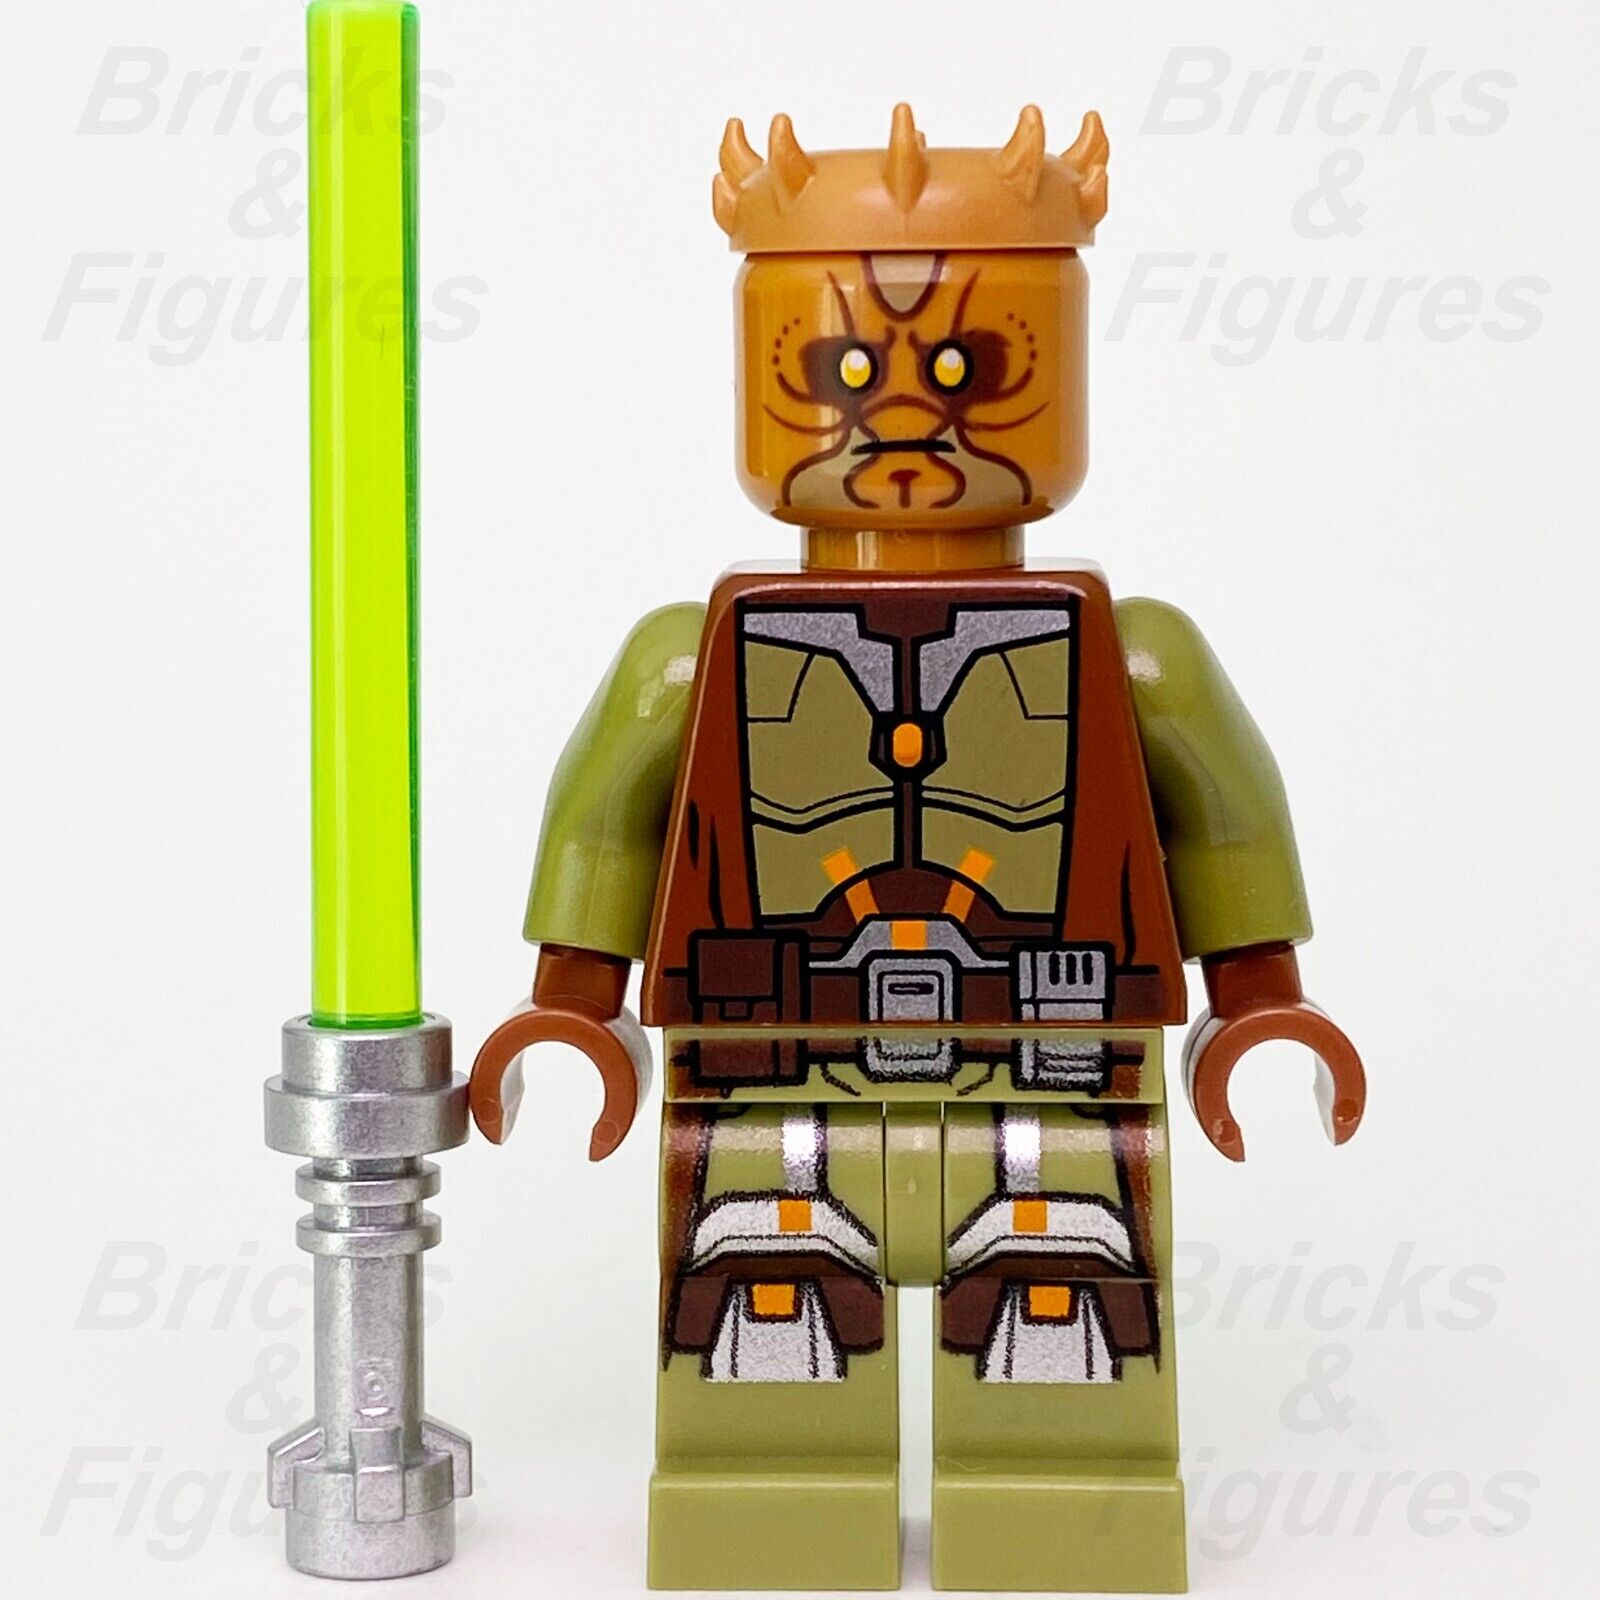 LEGO Star Wars Jedi Knight Minifigure Kao Cen Darach The Old Republic 75025